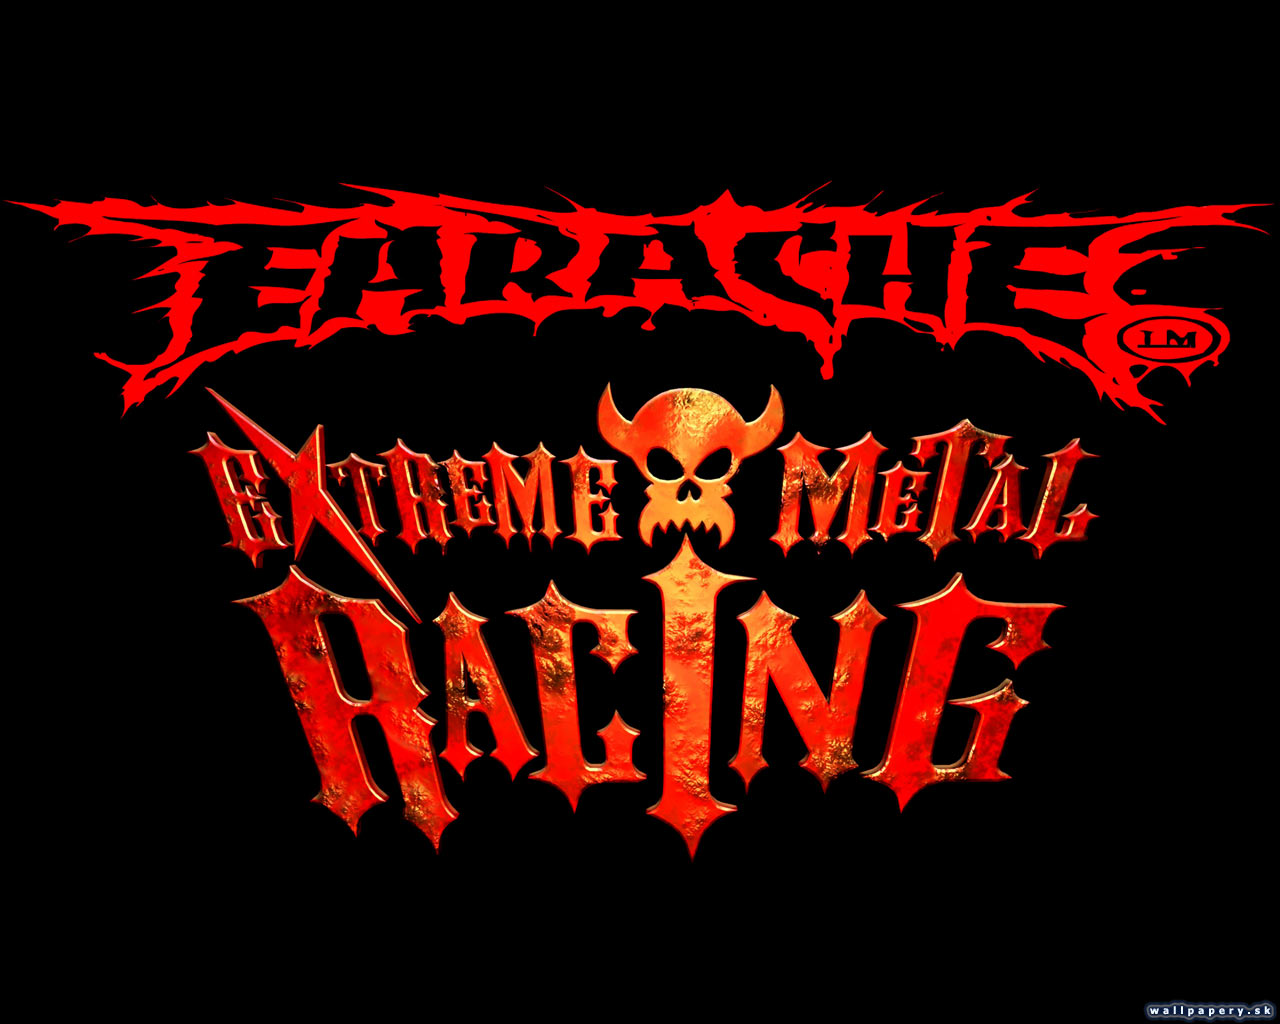 Earache - Extreme Metal Racing - wallpaper 3